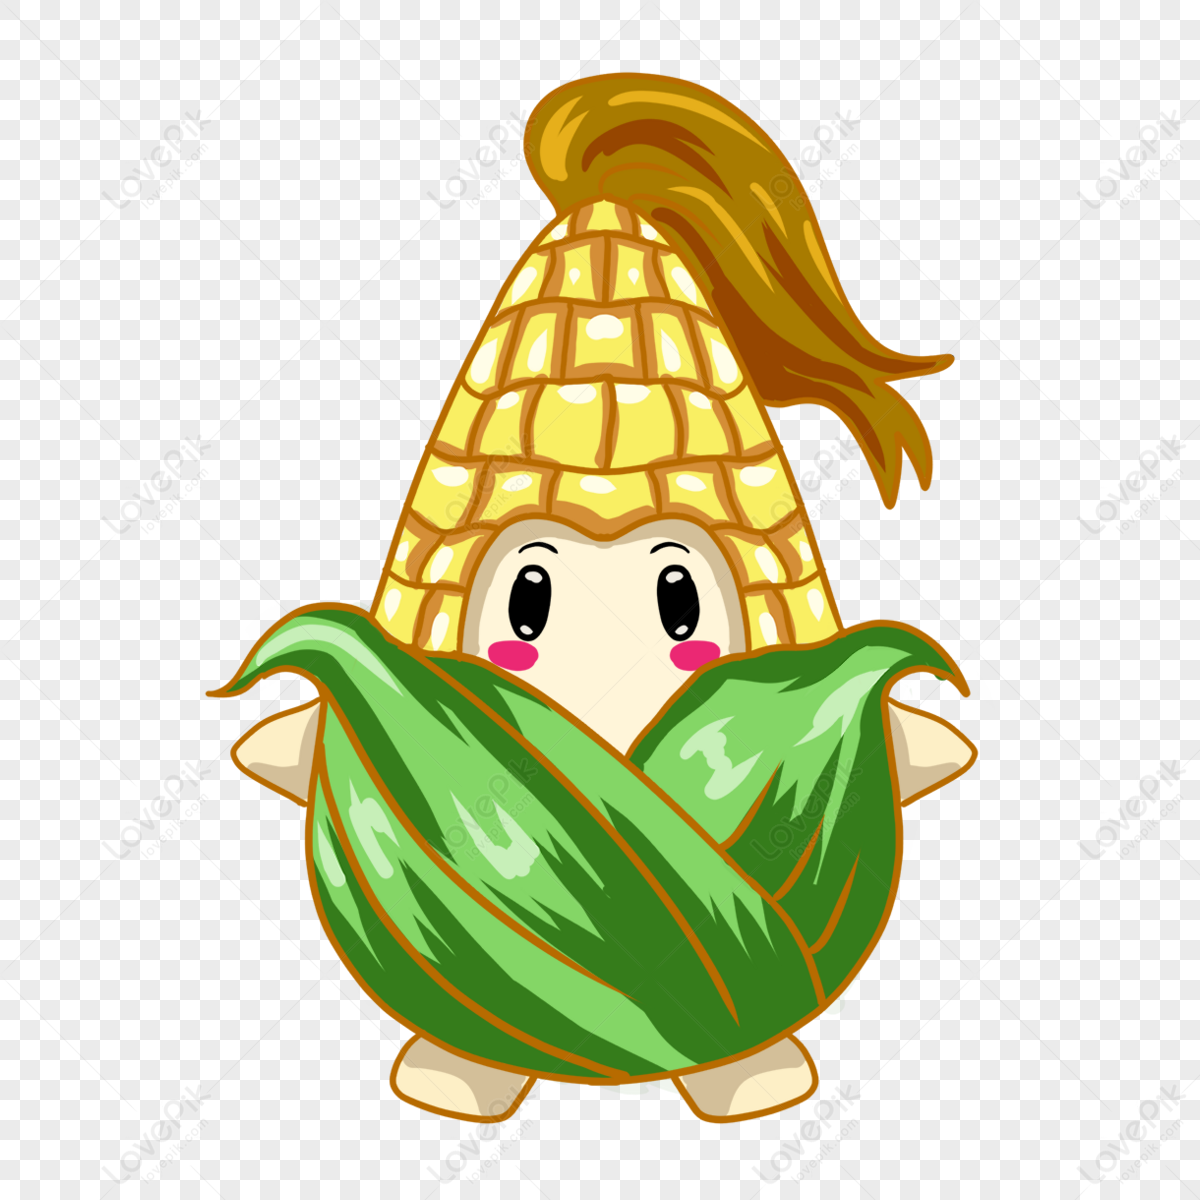 Corn Cartoon png download - 858*1000 - Free Transparent Corn On The Cob png  Download. - CleanPNG / KissPNG